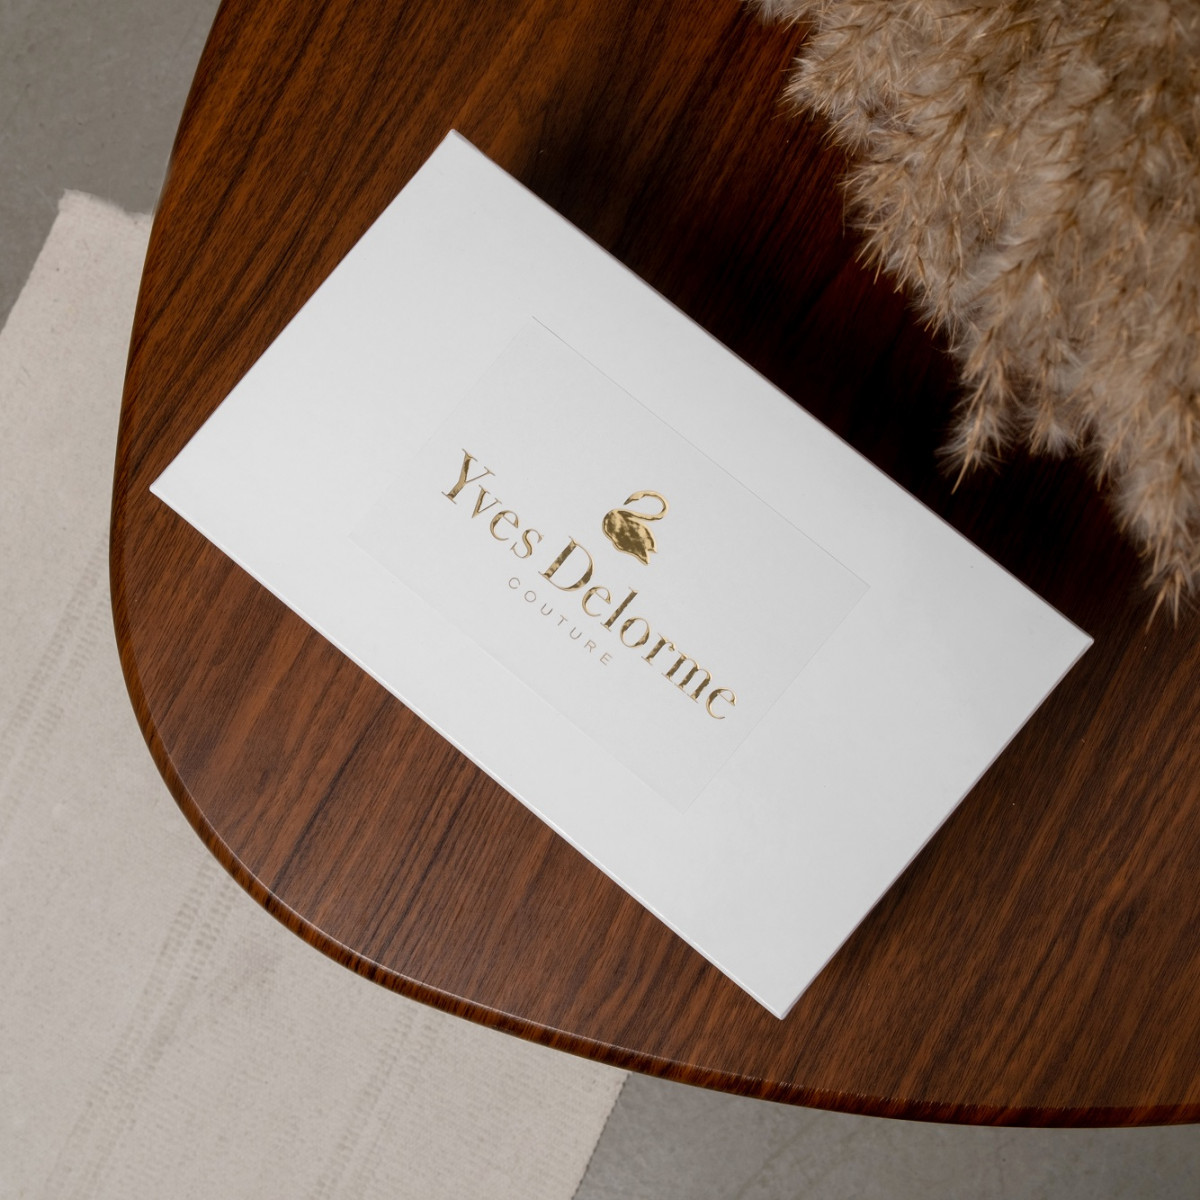 тапки Yves Delorme Couture Adagio - купить в магазине Yves Delorme Russia